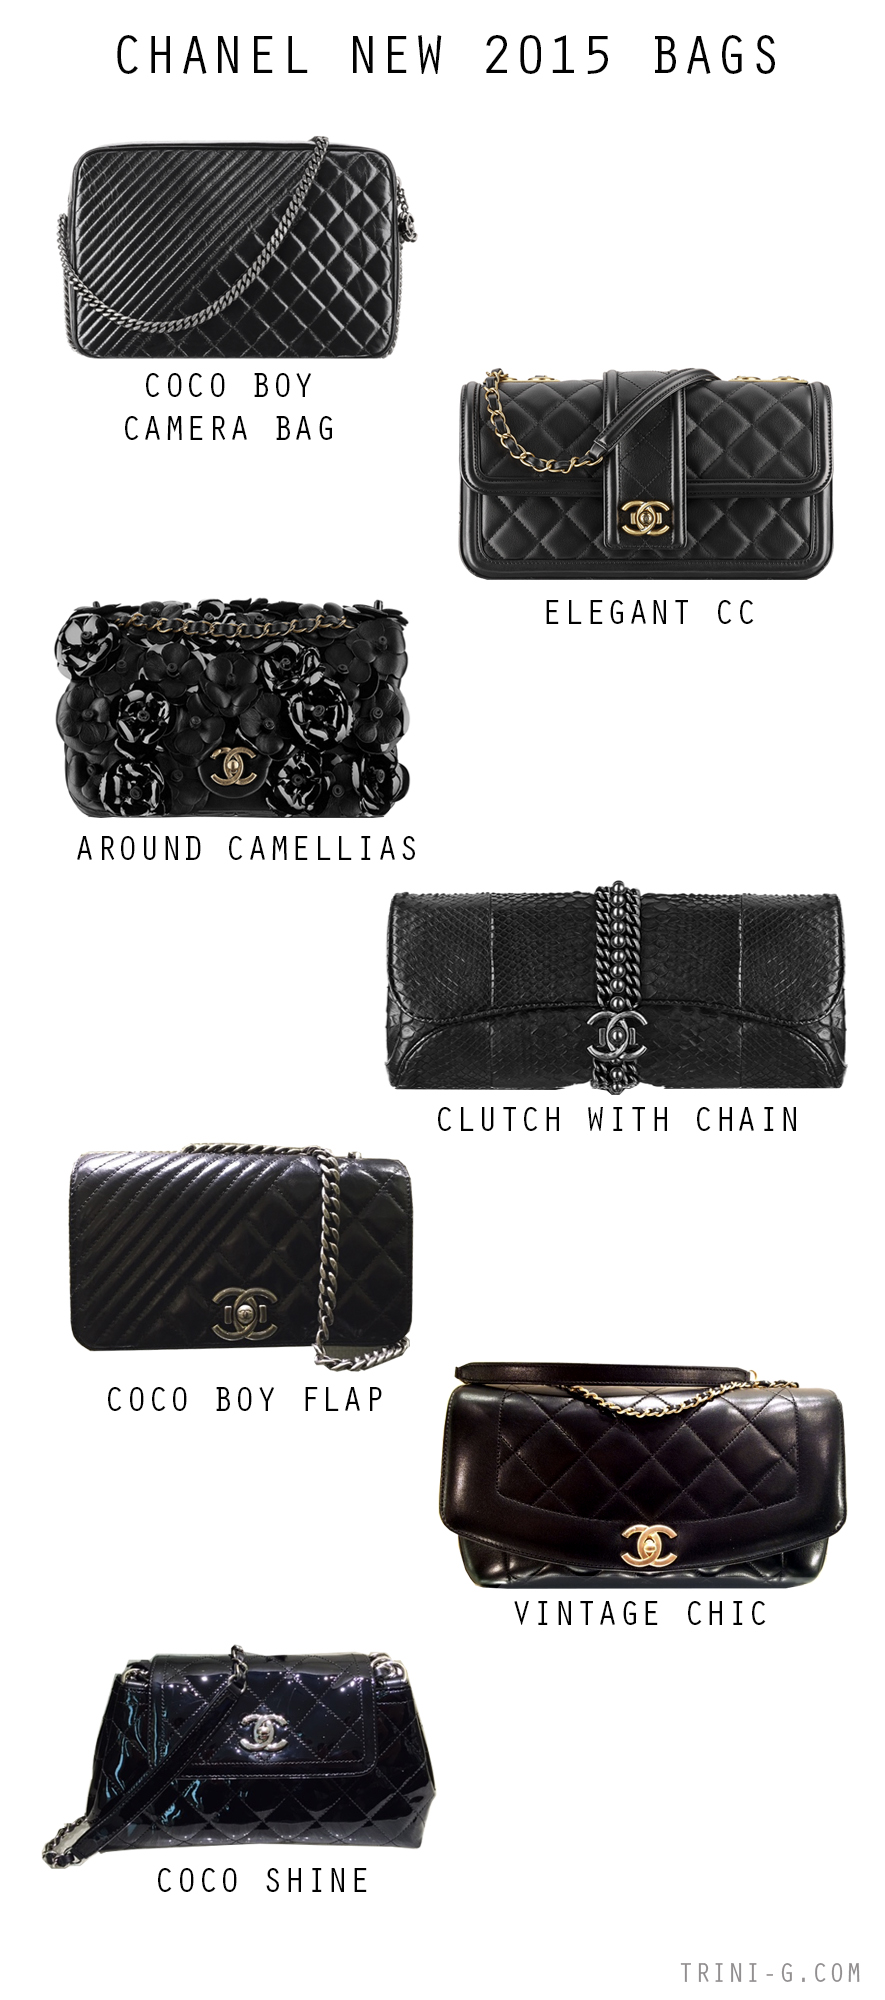 Trini blog | Chanel 2015 New bags